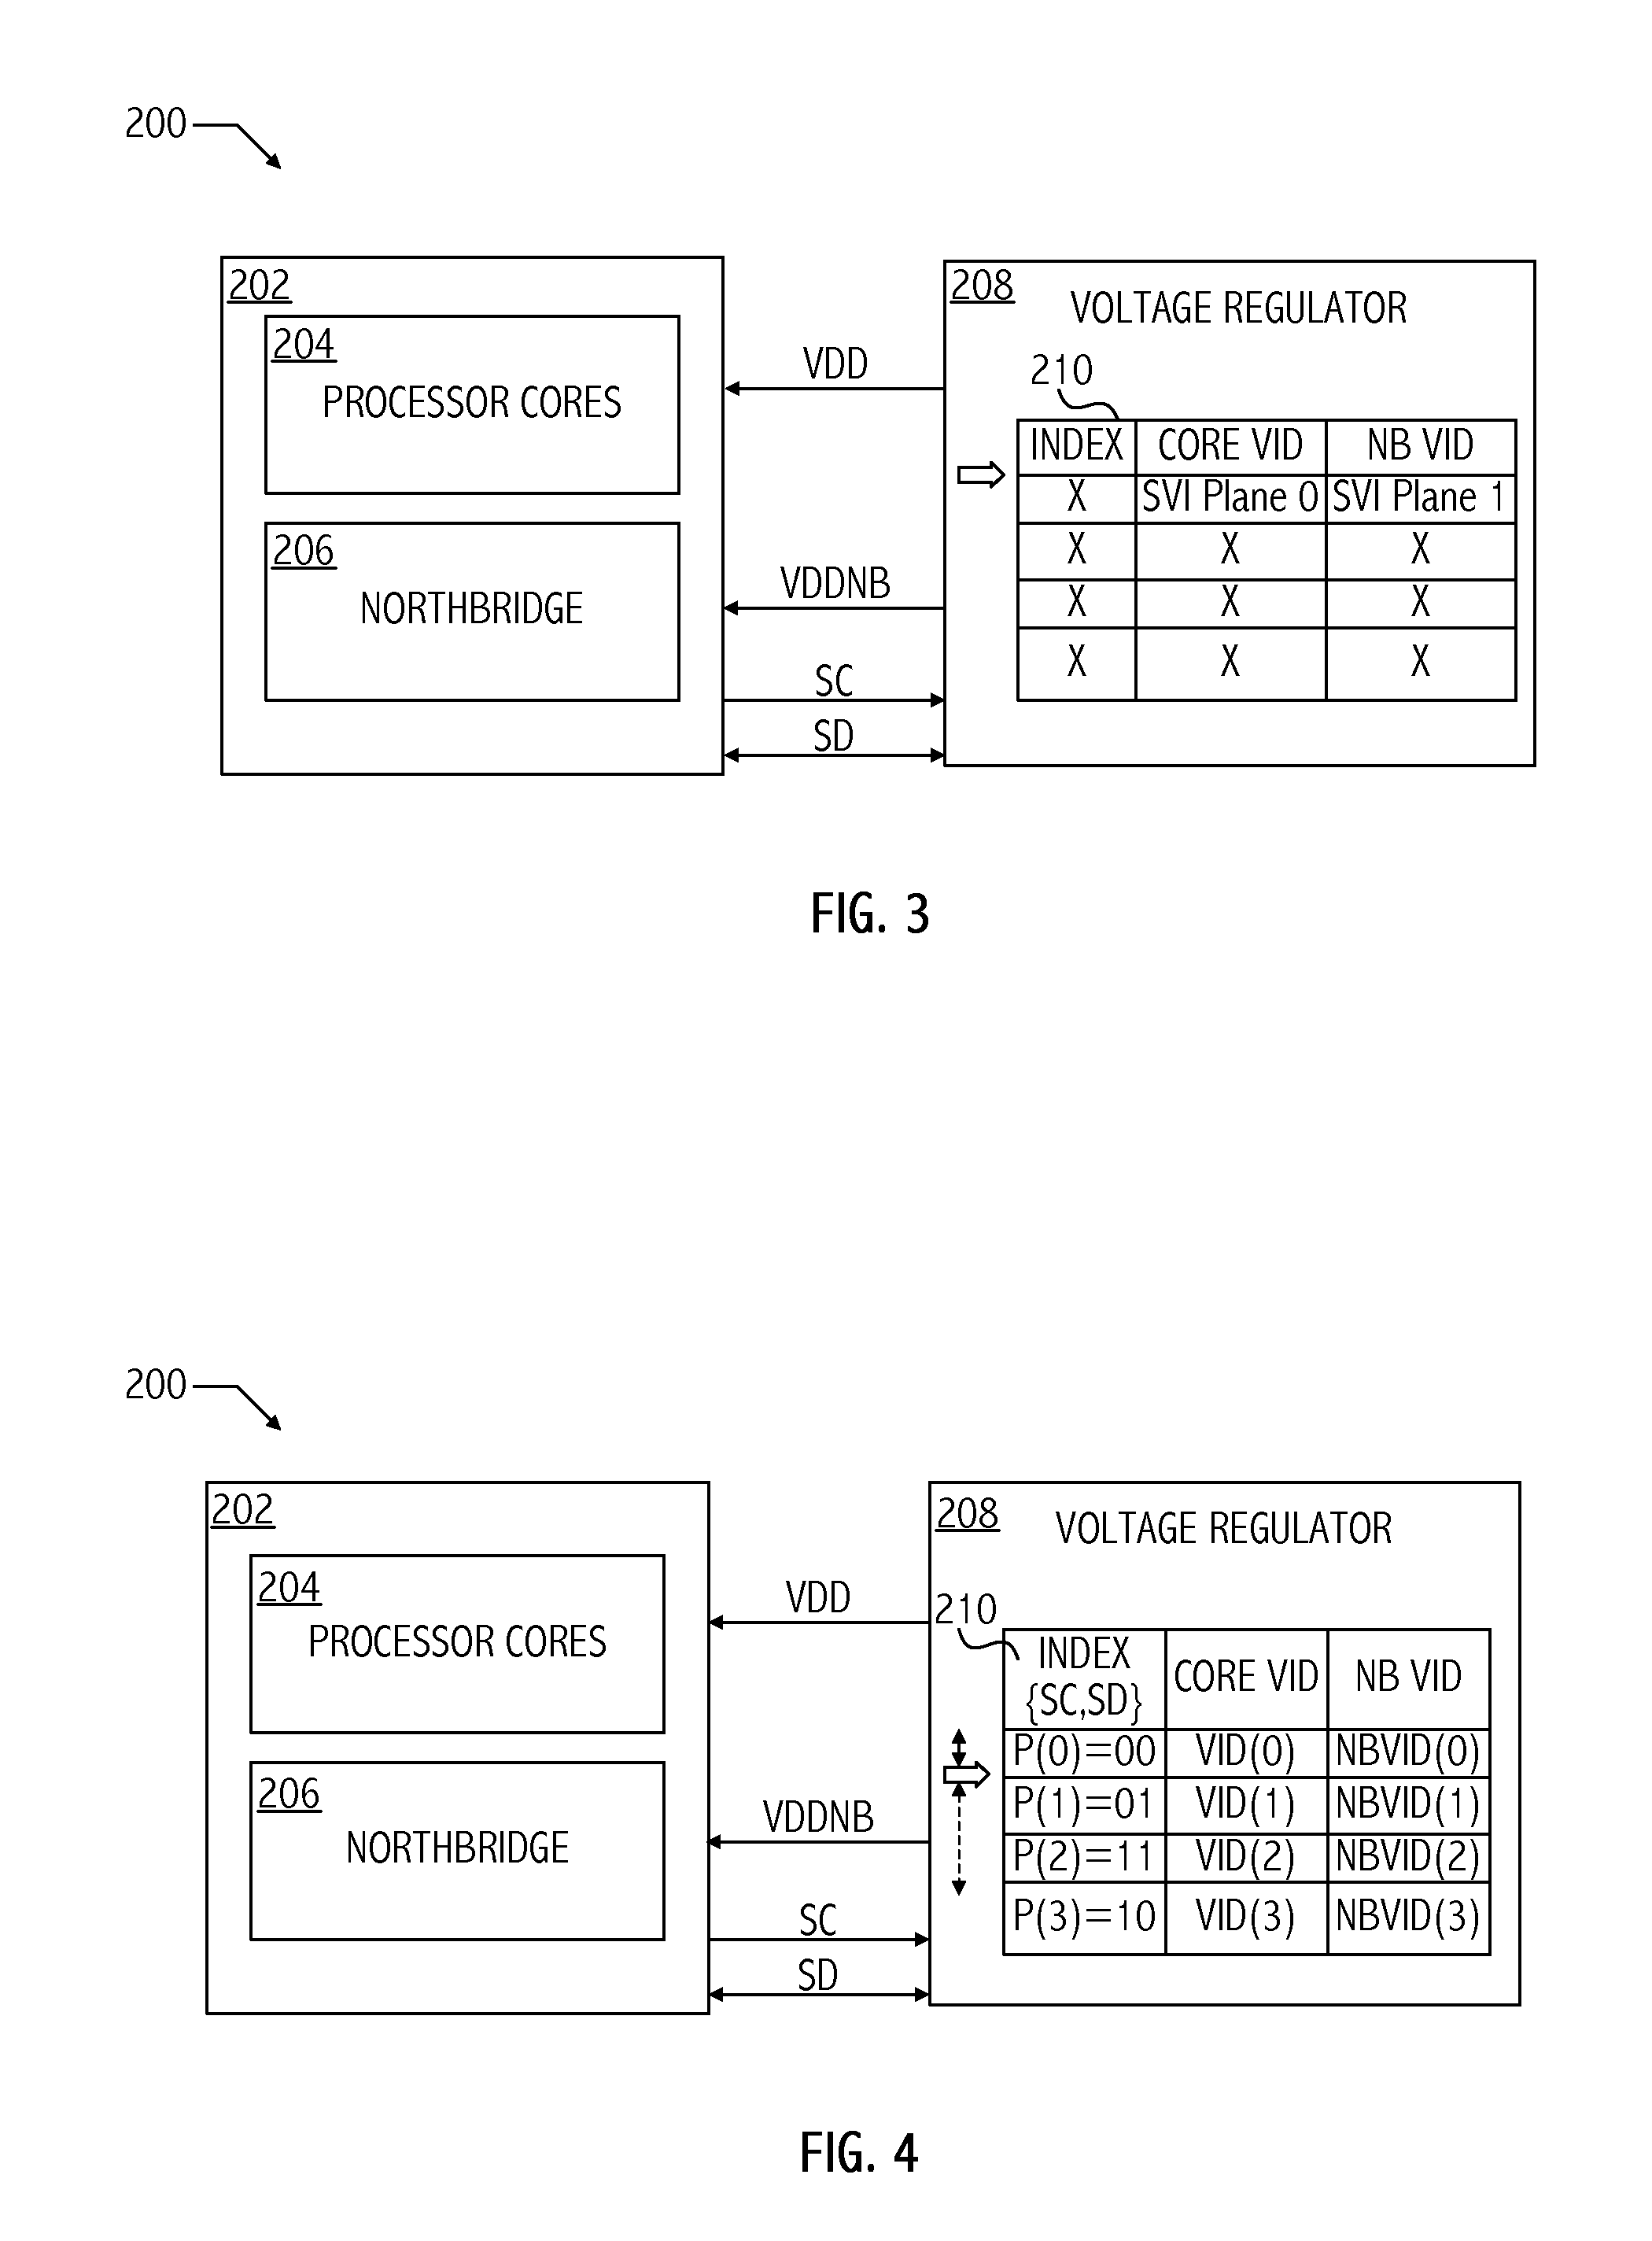 Dynamic table look-up based voltage regulator control